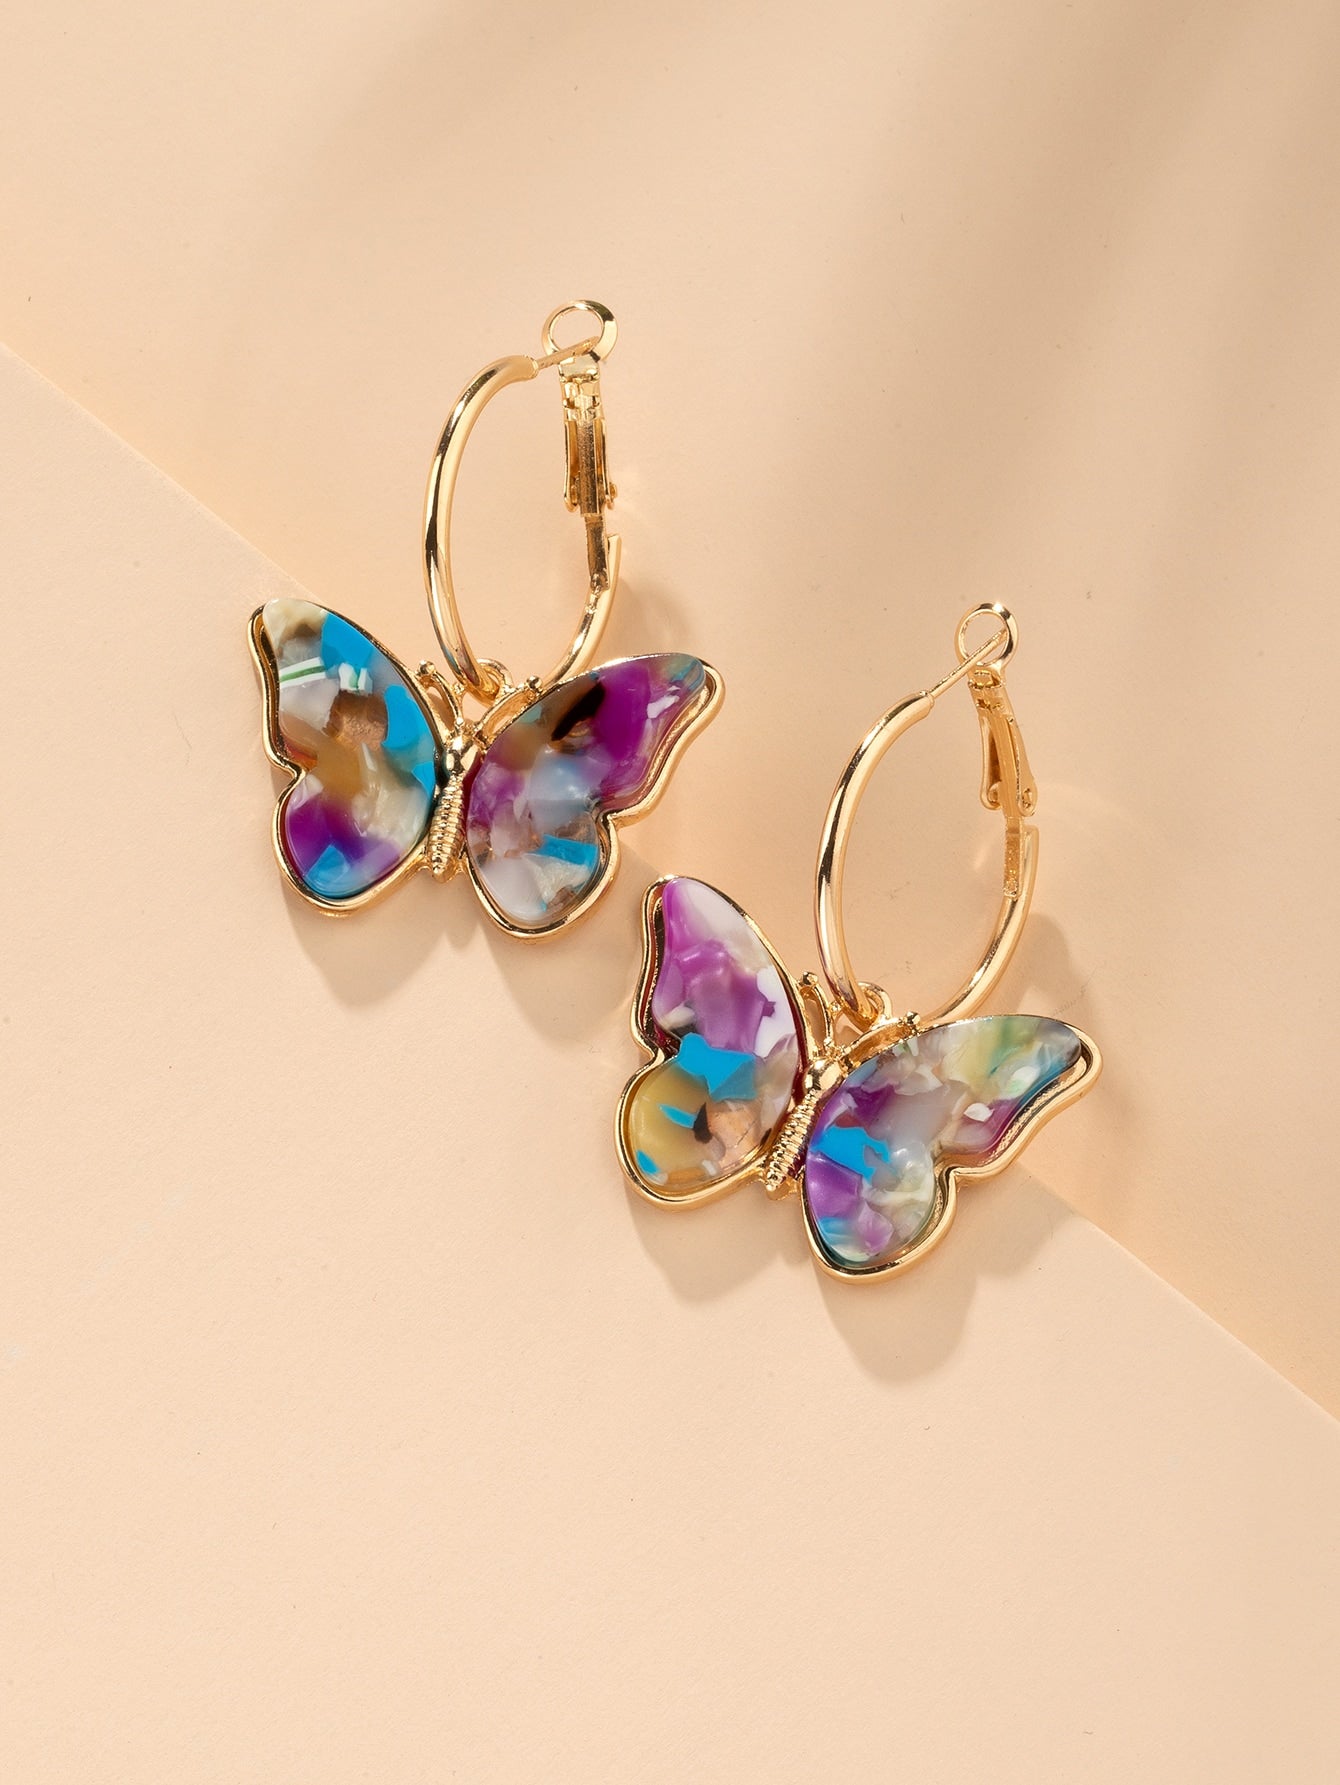 Stained Glass Butterfly Earrings